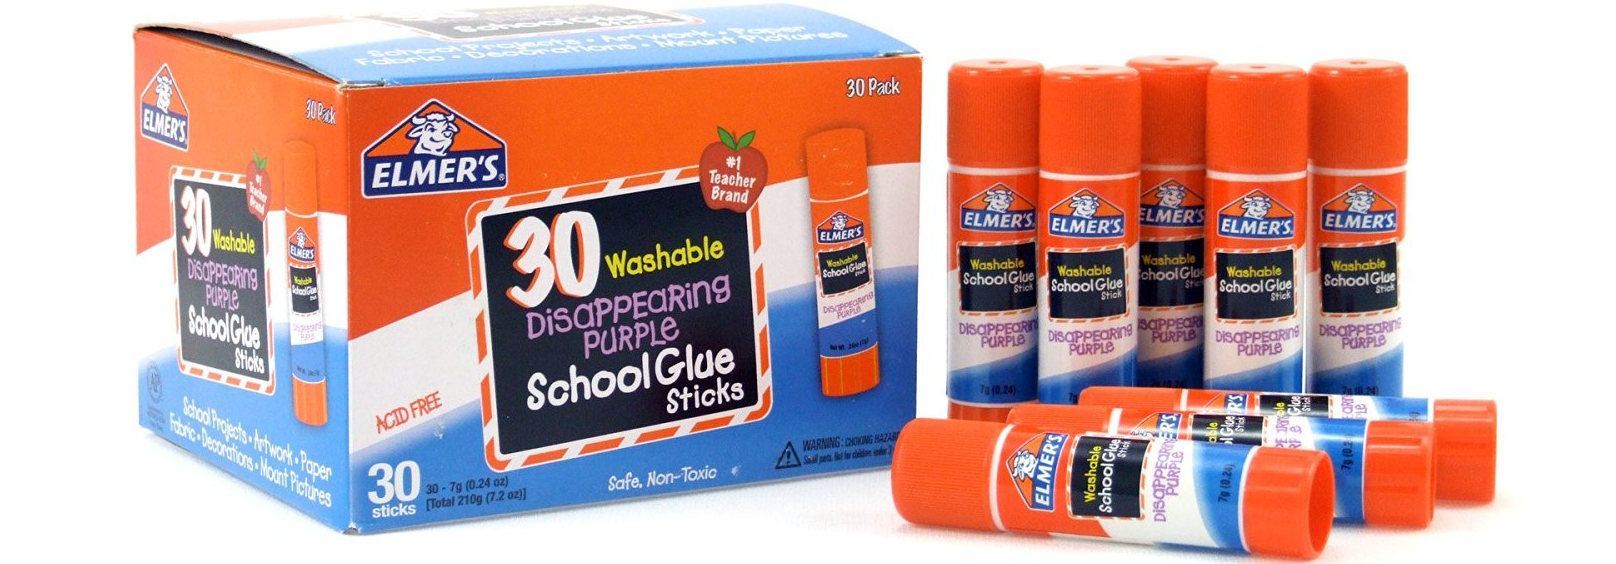 Amazon – 30-ct Elmer’s Washable School Glue Sticks just .97!